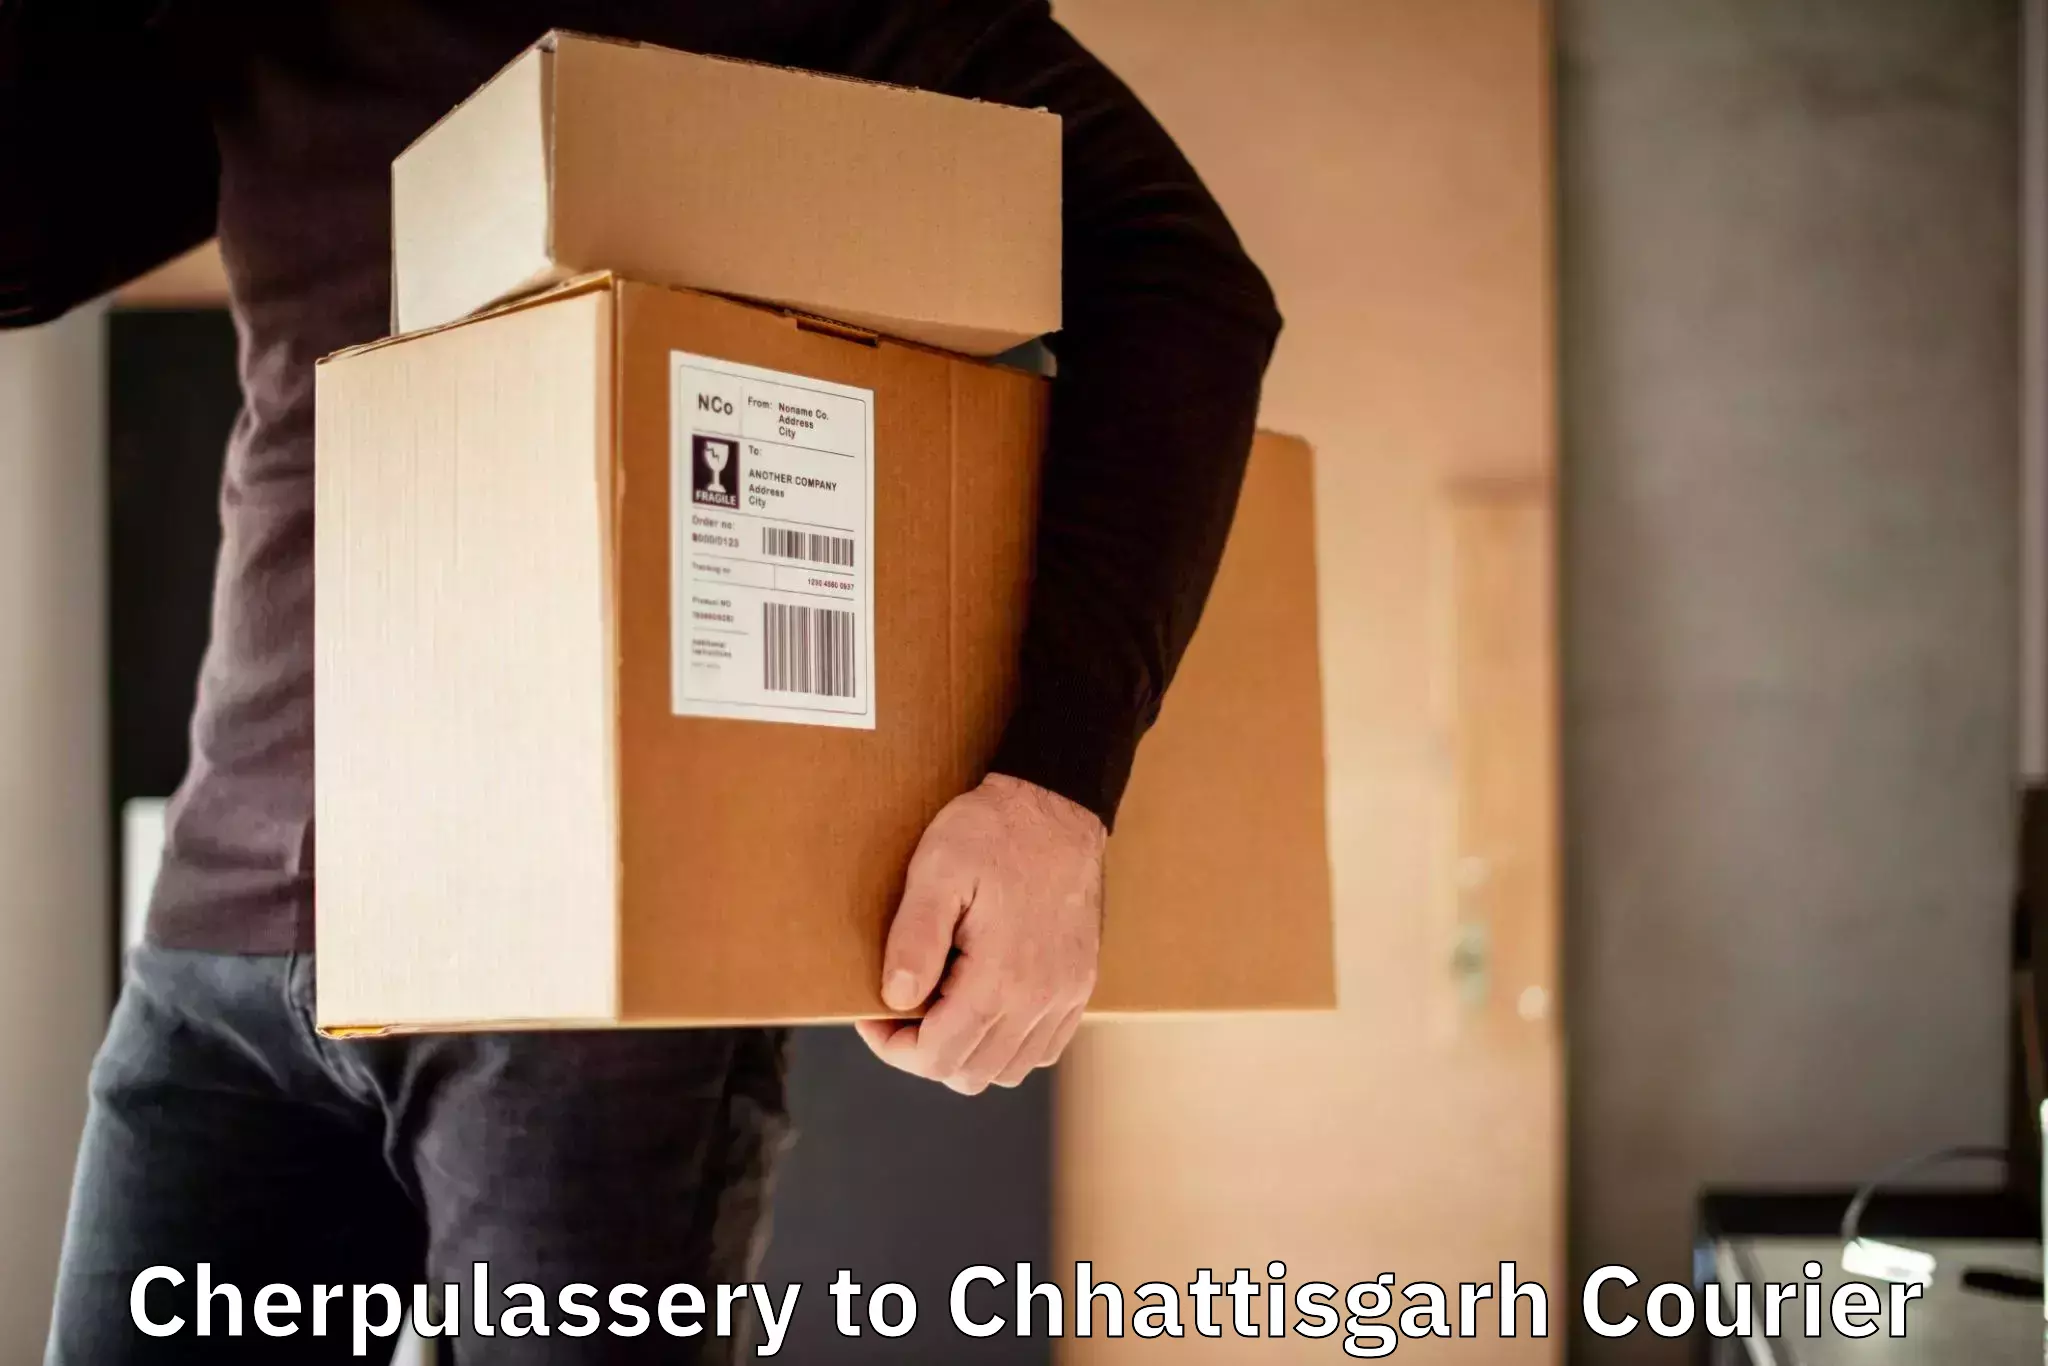 Supply chain delivery Cherpulassery to Raipur